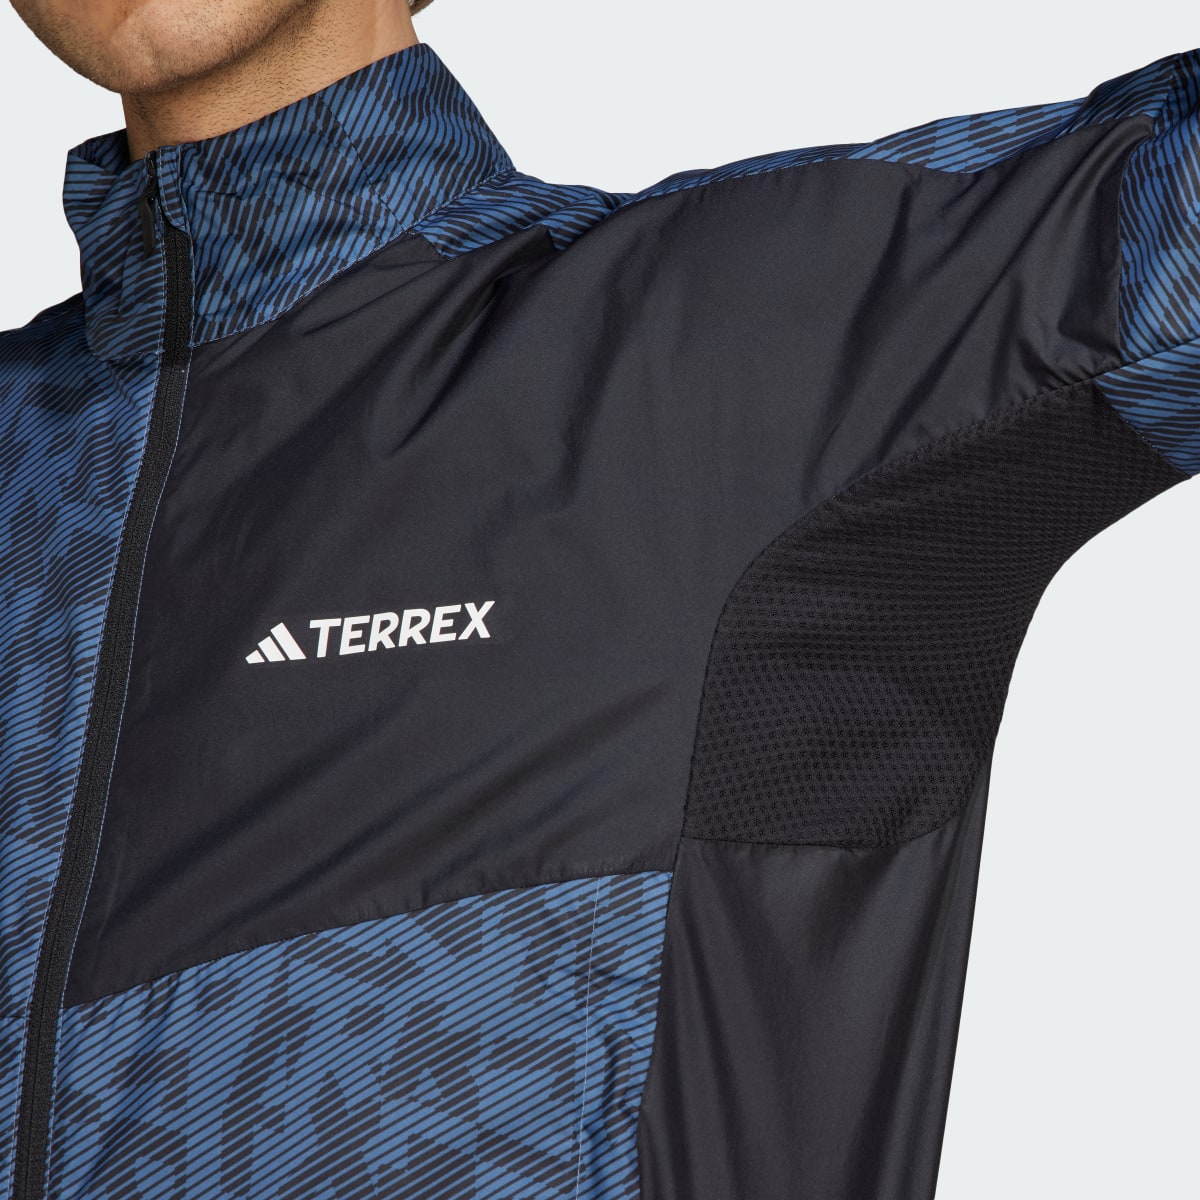 Adidas TERREX Trail Running Wind Jacket. 8